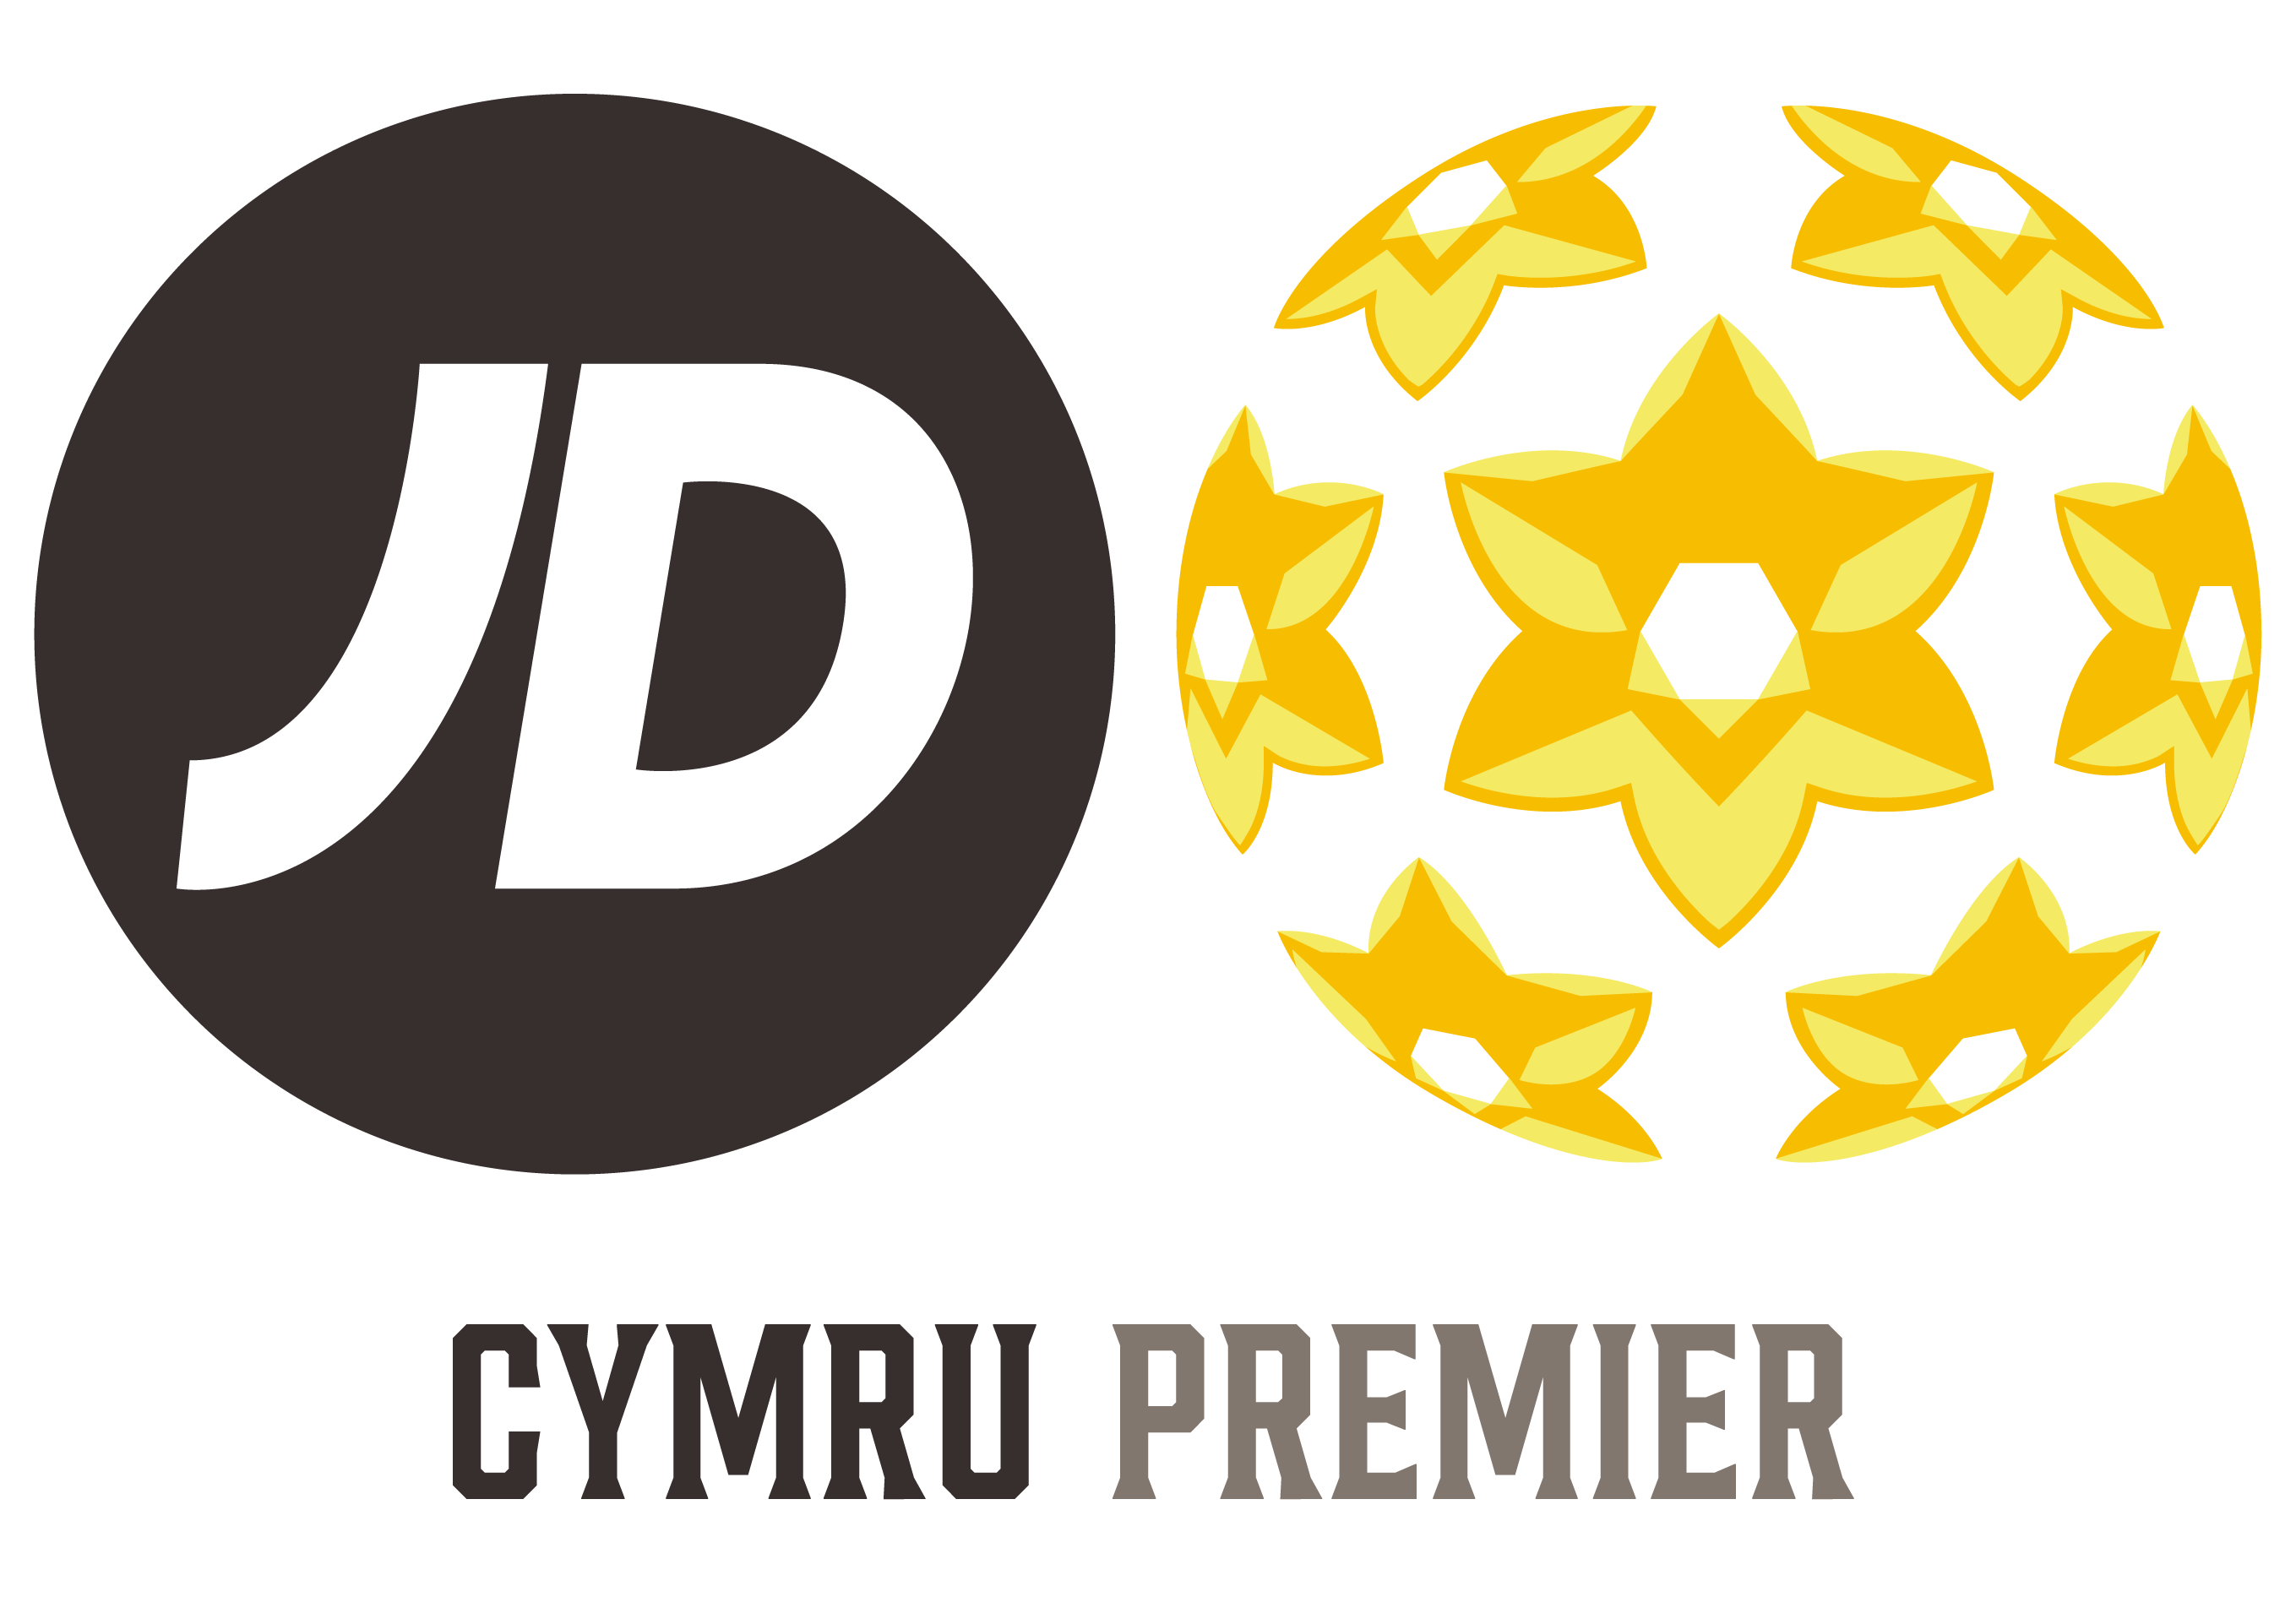 FAW Cymru Premier League logo